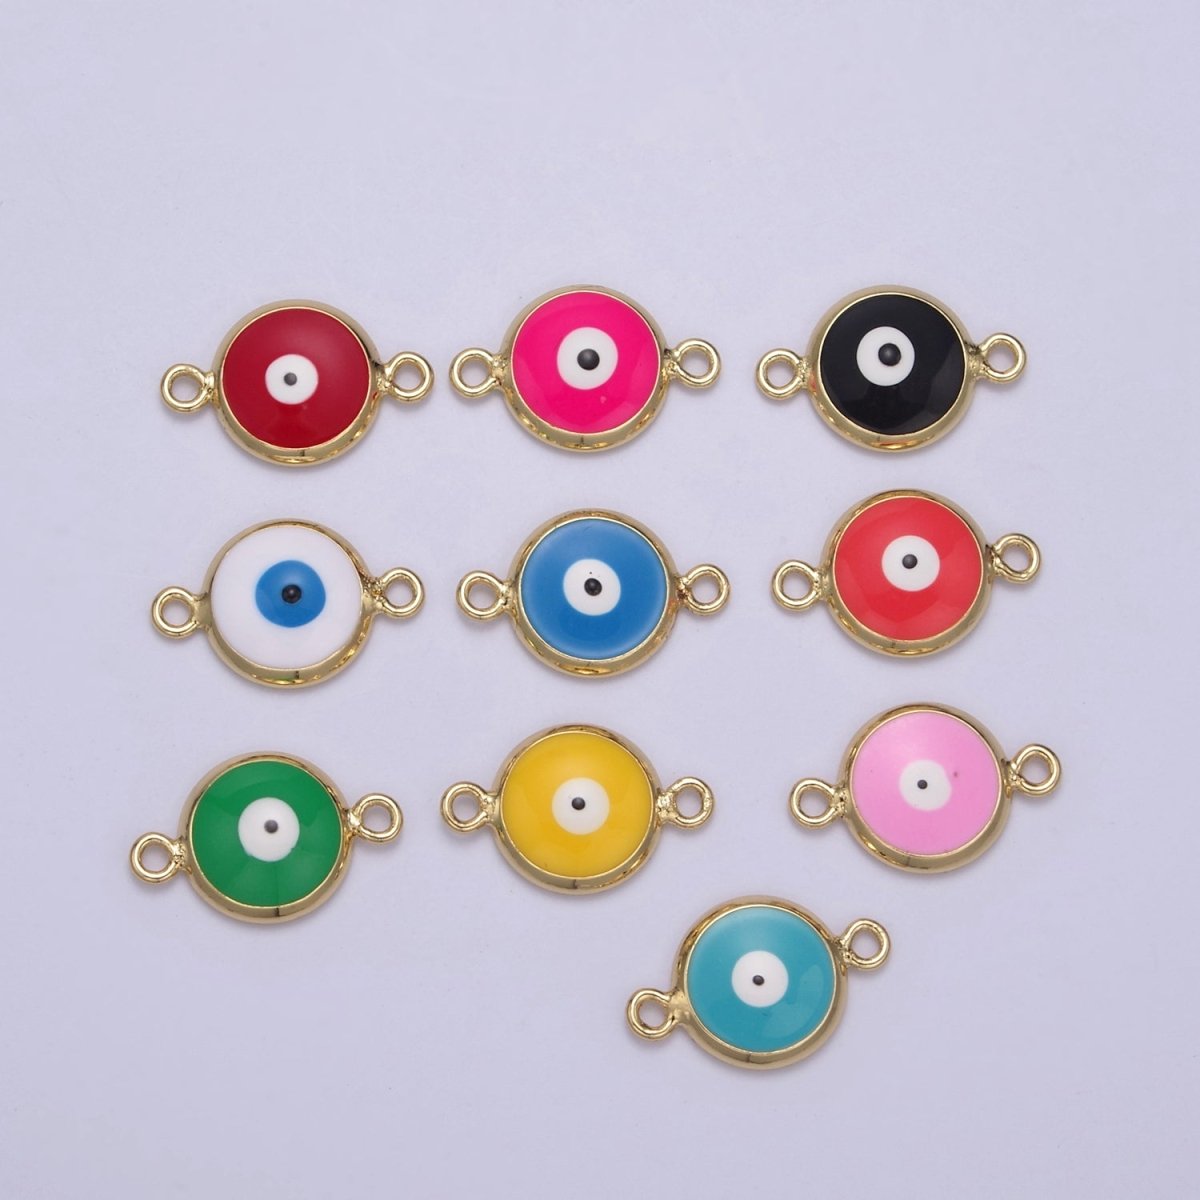 Mini Evil Eye Connector, Gold Filled Evil Eye Jewelry, Lucky Eye Jewelry, Evil Eye Charms, Evil Eye Jewelry, Good Luck Charms N-121 - N-130 - DLUXCA